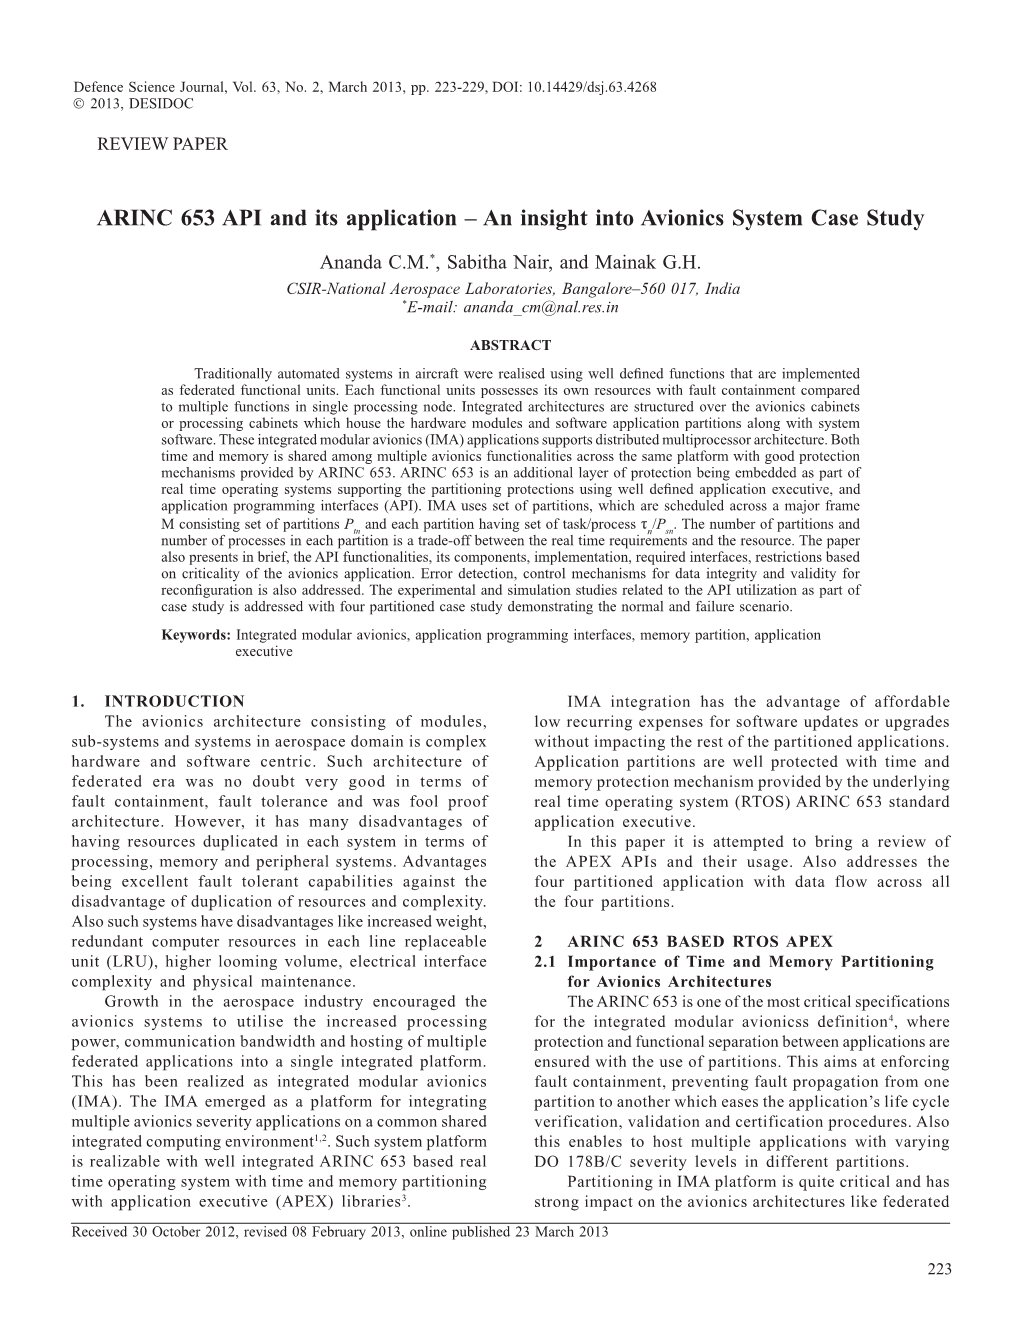 ARINC 653 API and Its Application – an Insight Into Avionics System Case Study